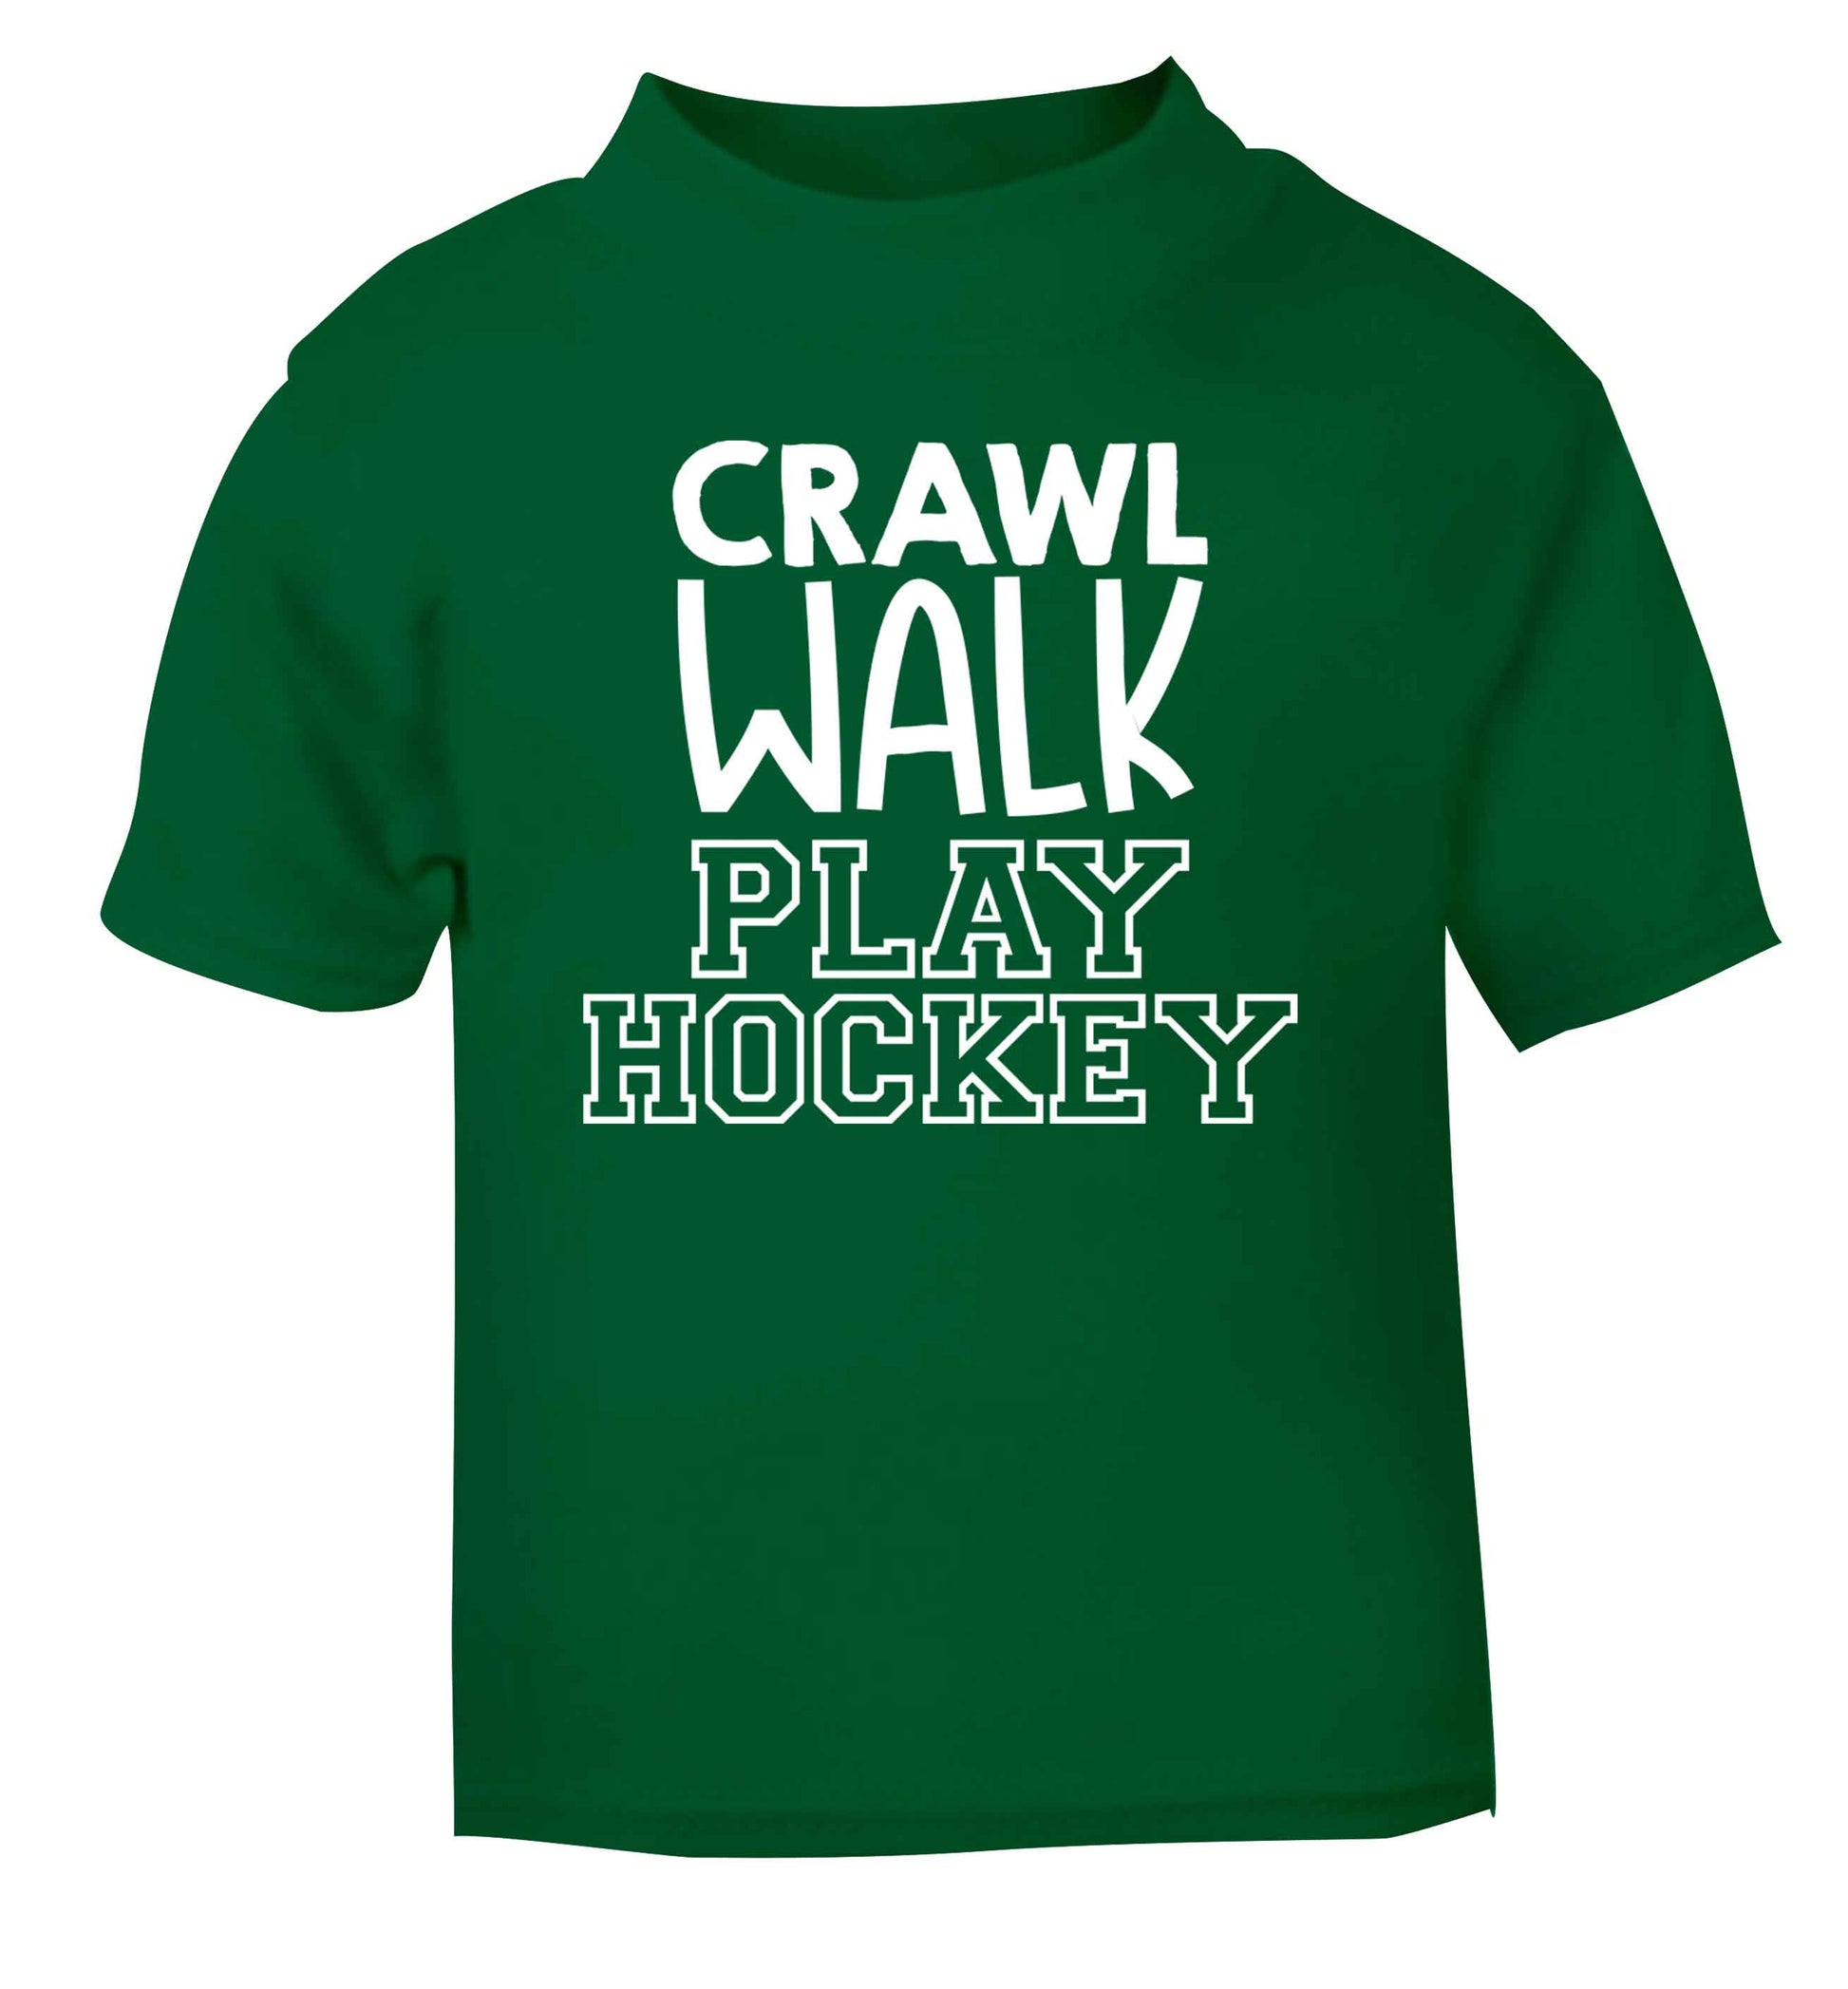 Crawl walk play hockey green Baby Toddler Tshirt 2 Years